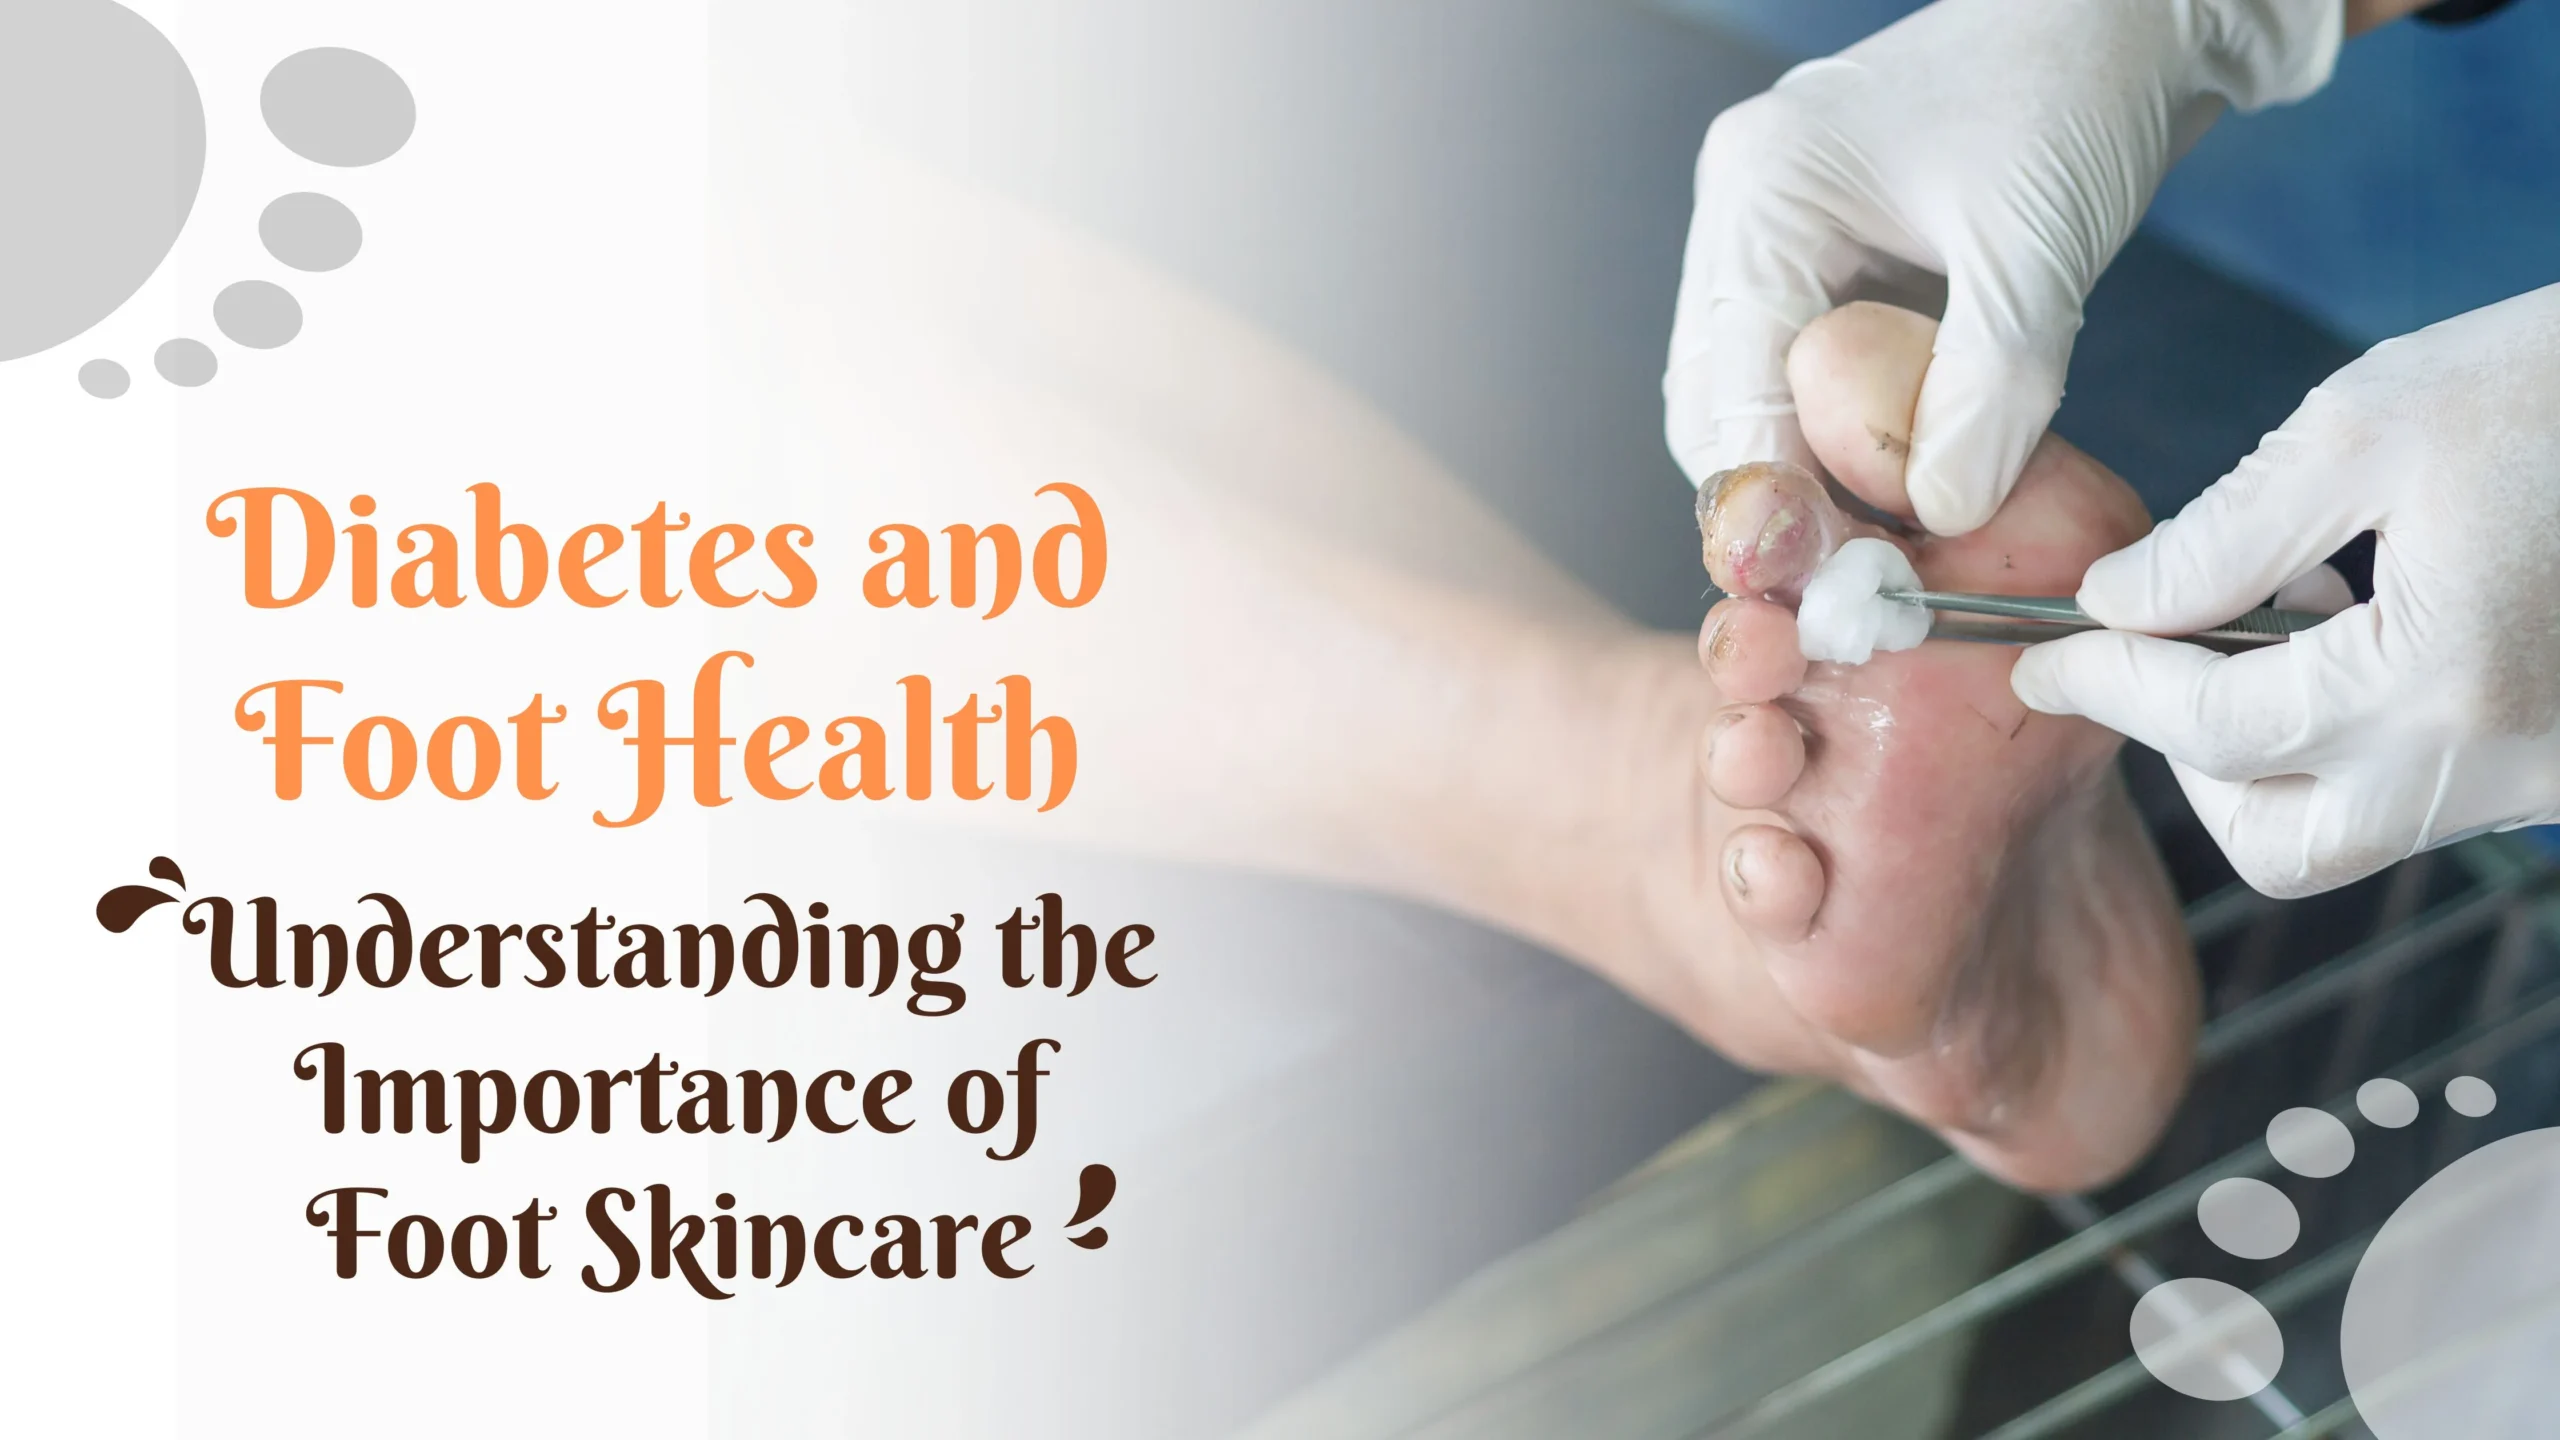 Importance of diabetic foot skincare